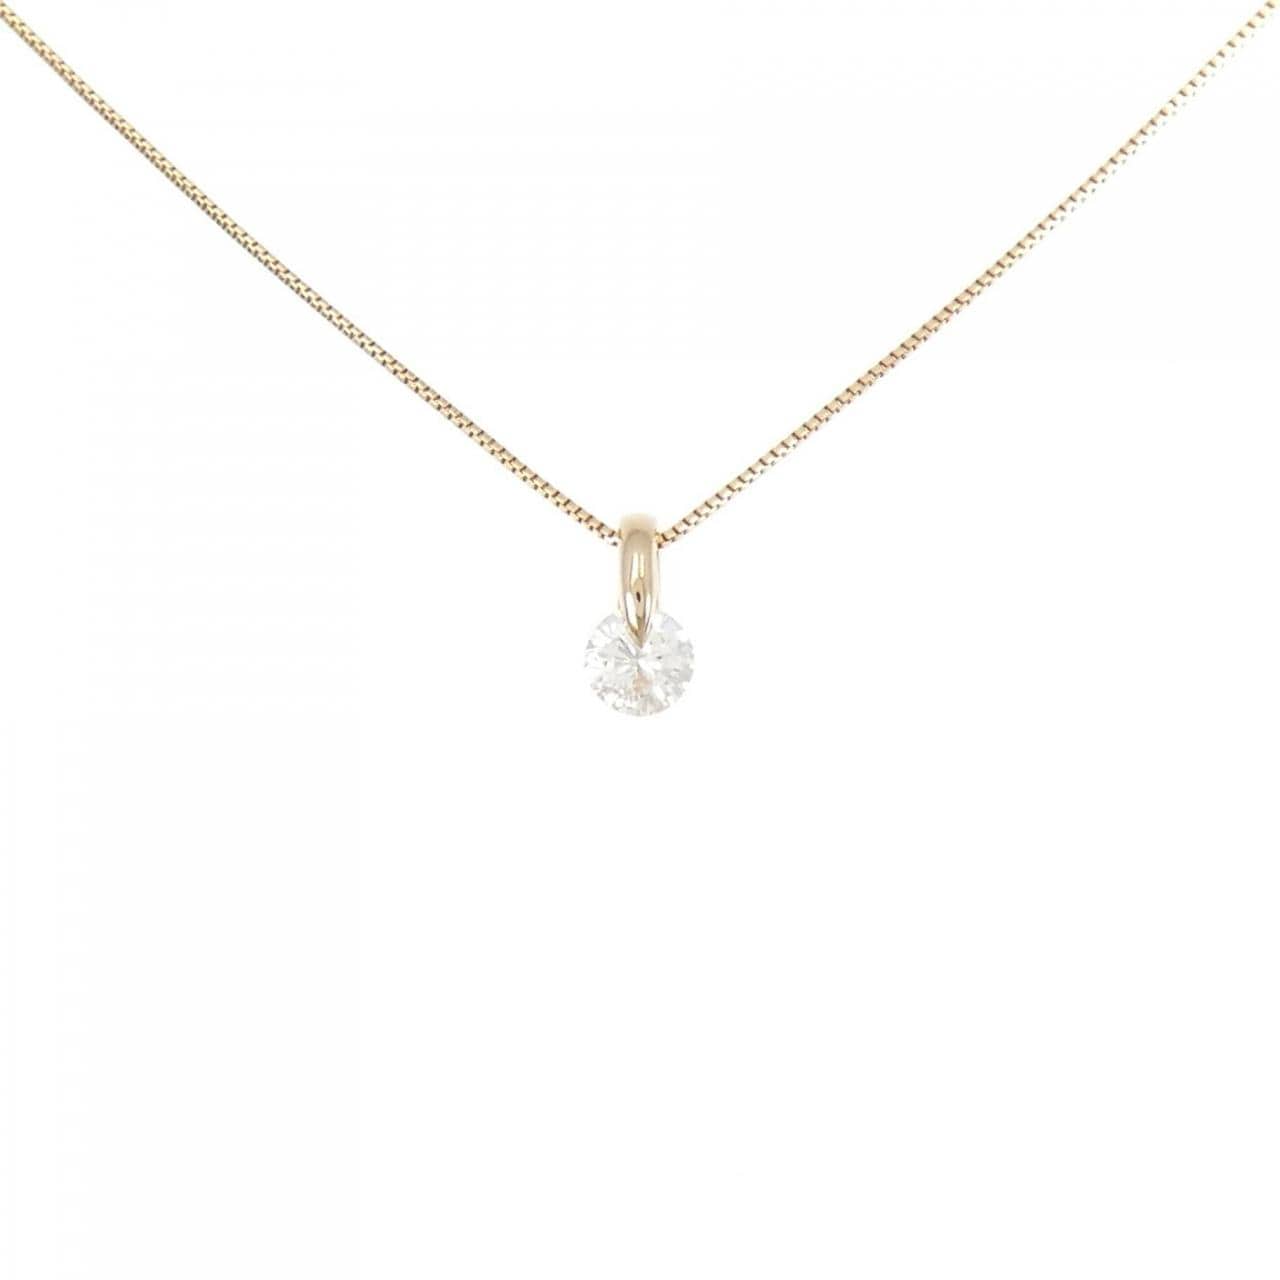 K18PG Solitaire Diamond Necklace 0.20CT